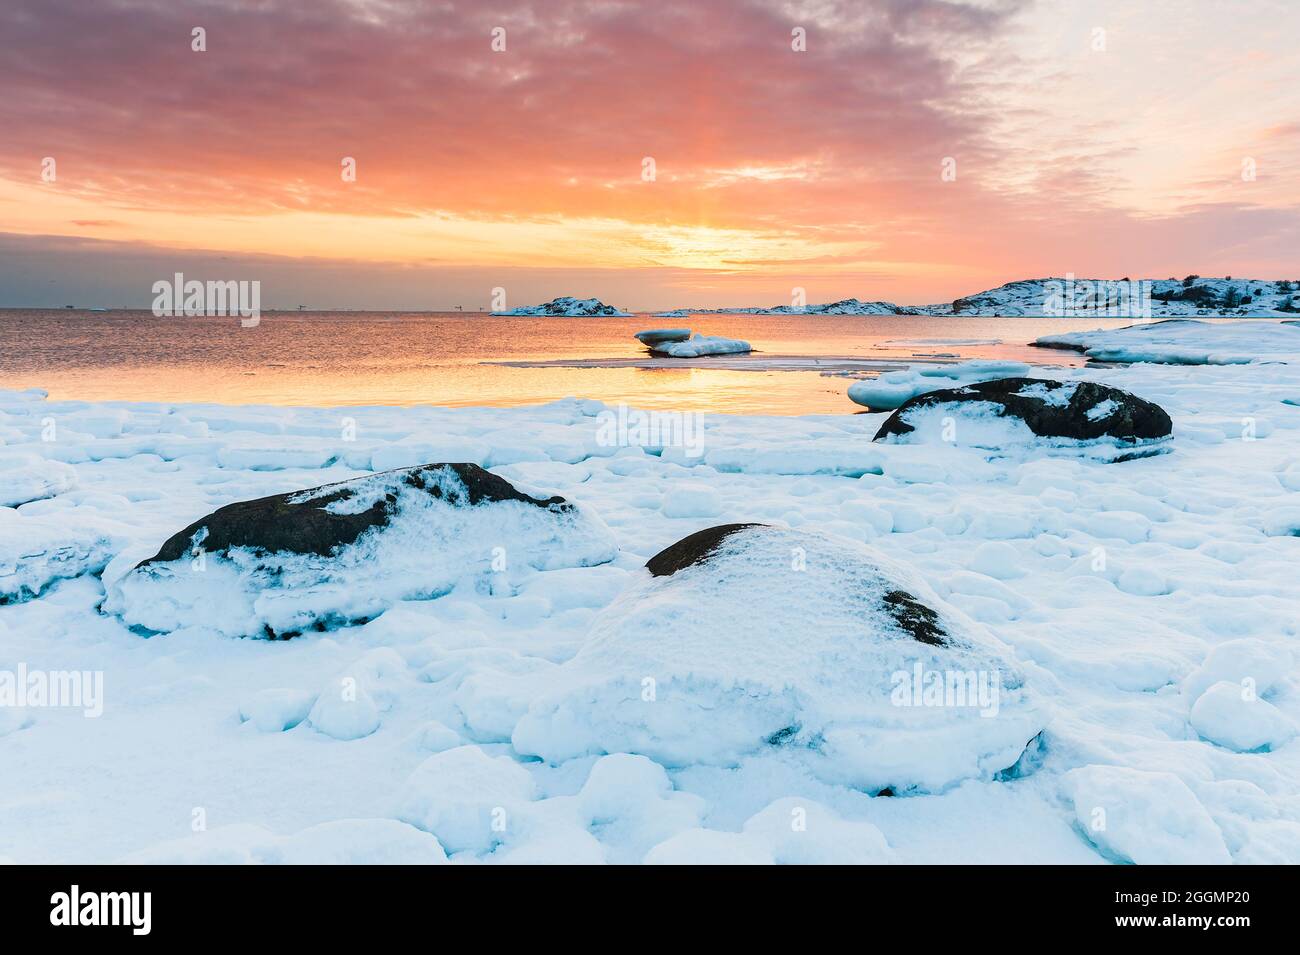 Snow covered coastal scene at sunset Stock Photo